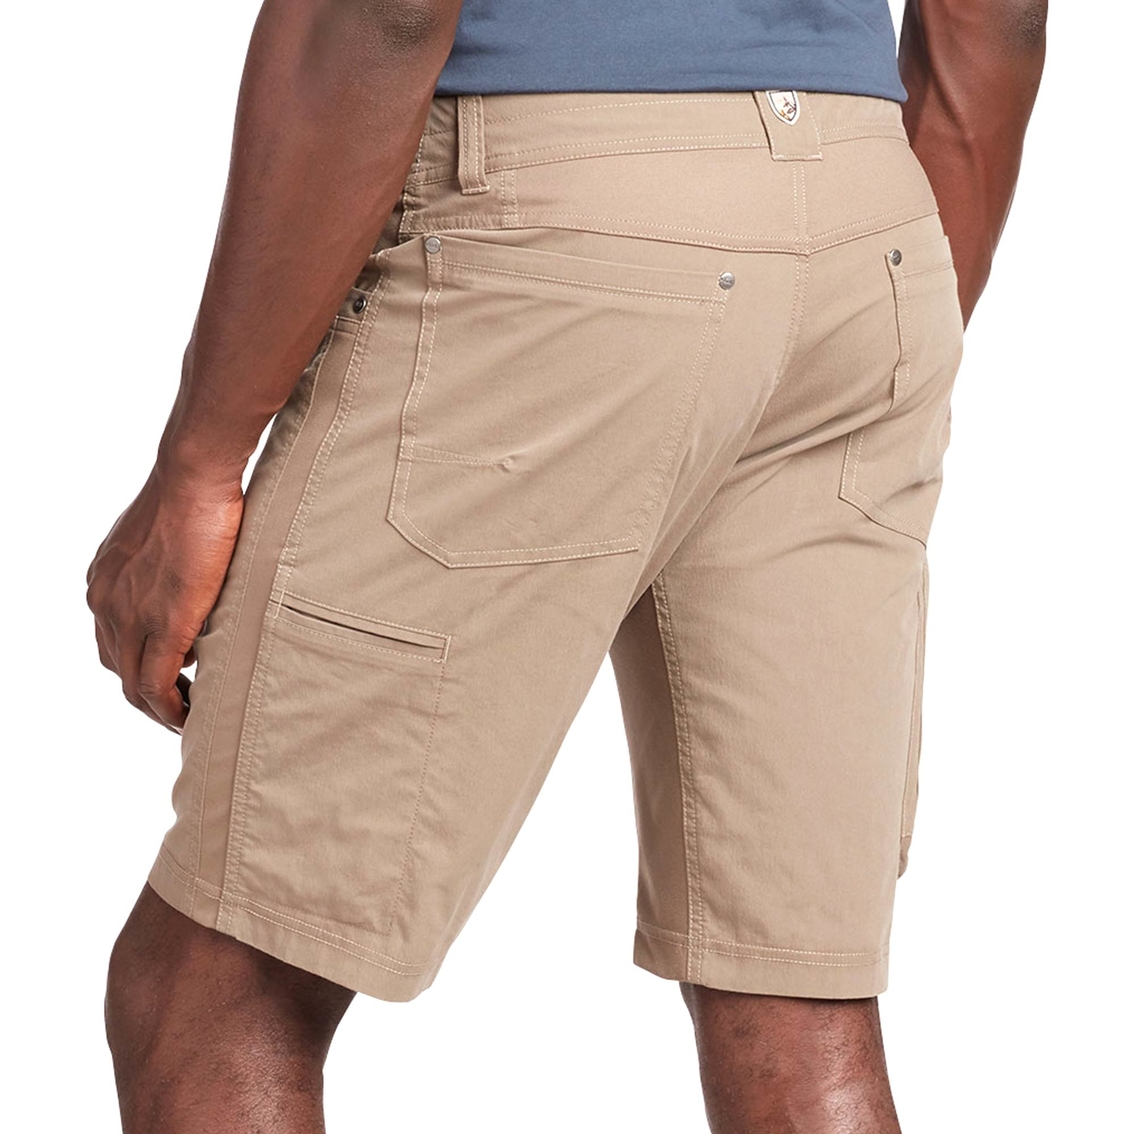 Kuhl Radikl 10.5 In. Shorts | Shorts | Clothing & Accessories | Shop ...